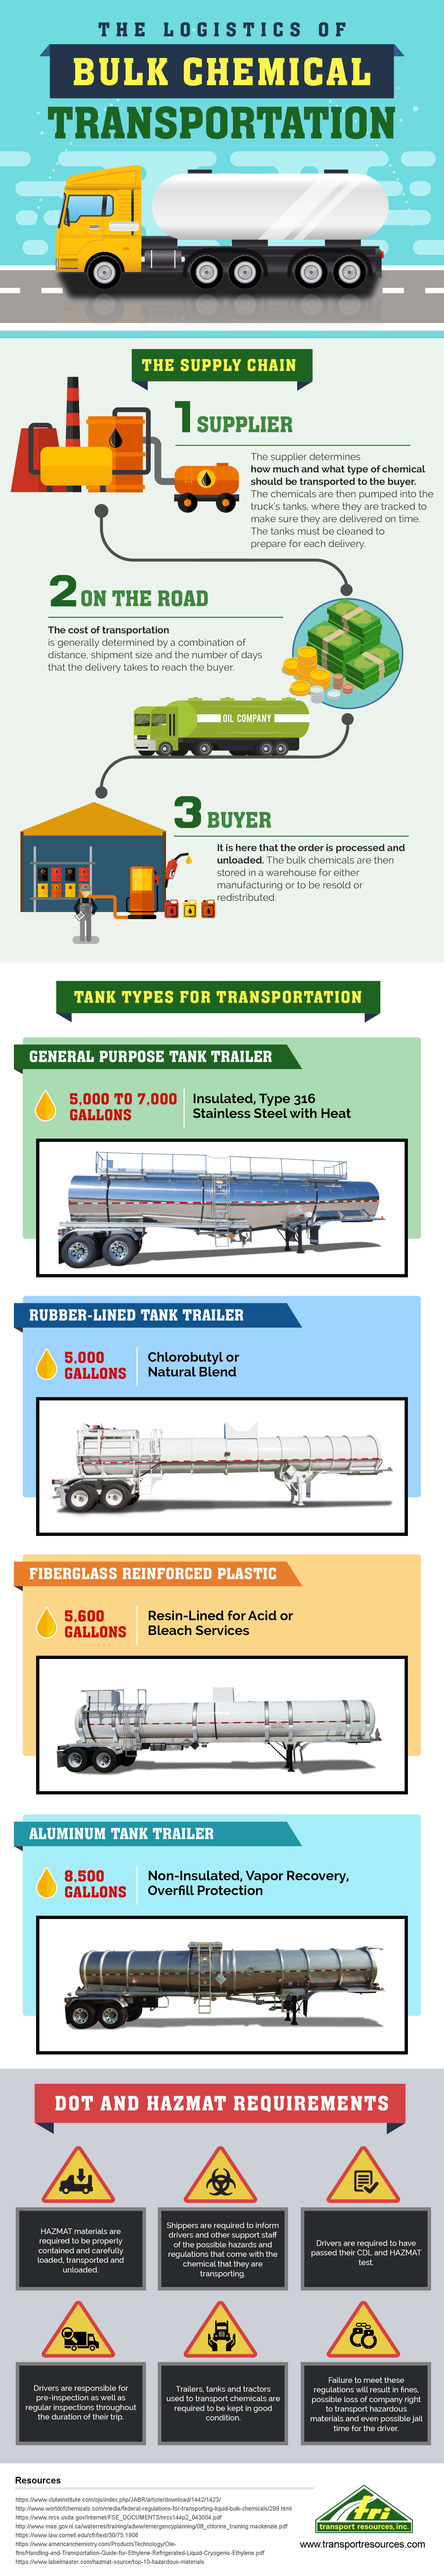 The Logistics of Bulk Chemical Transportation